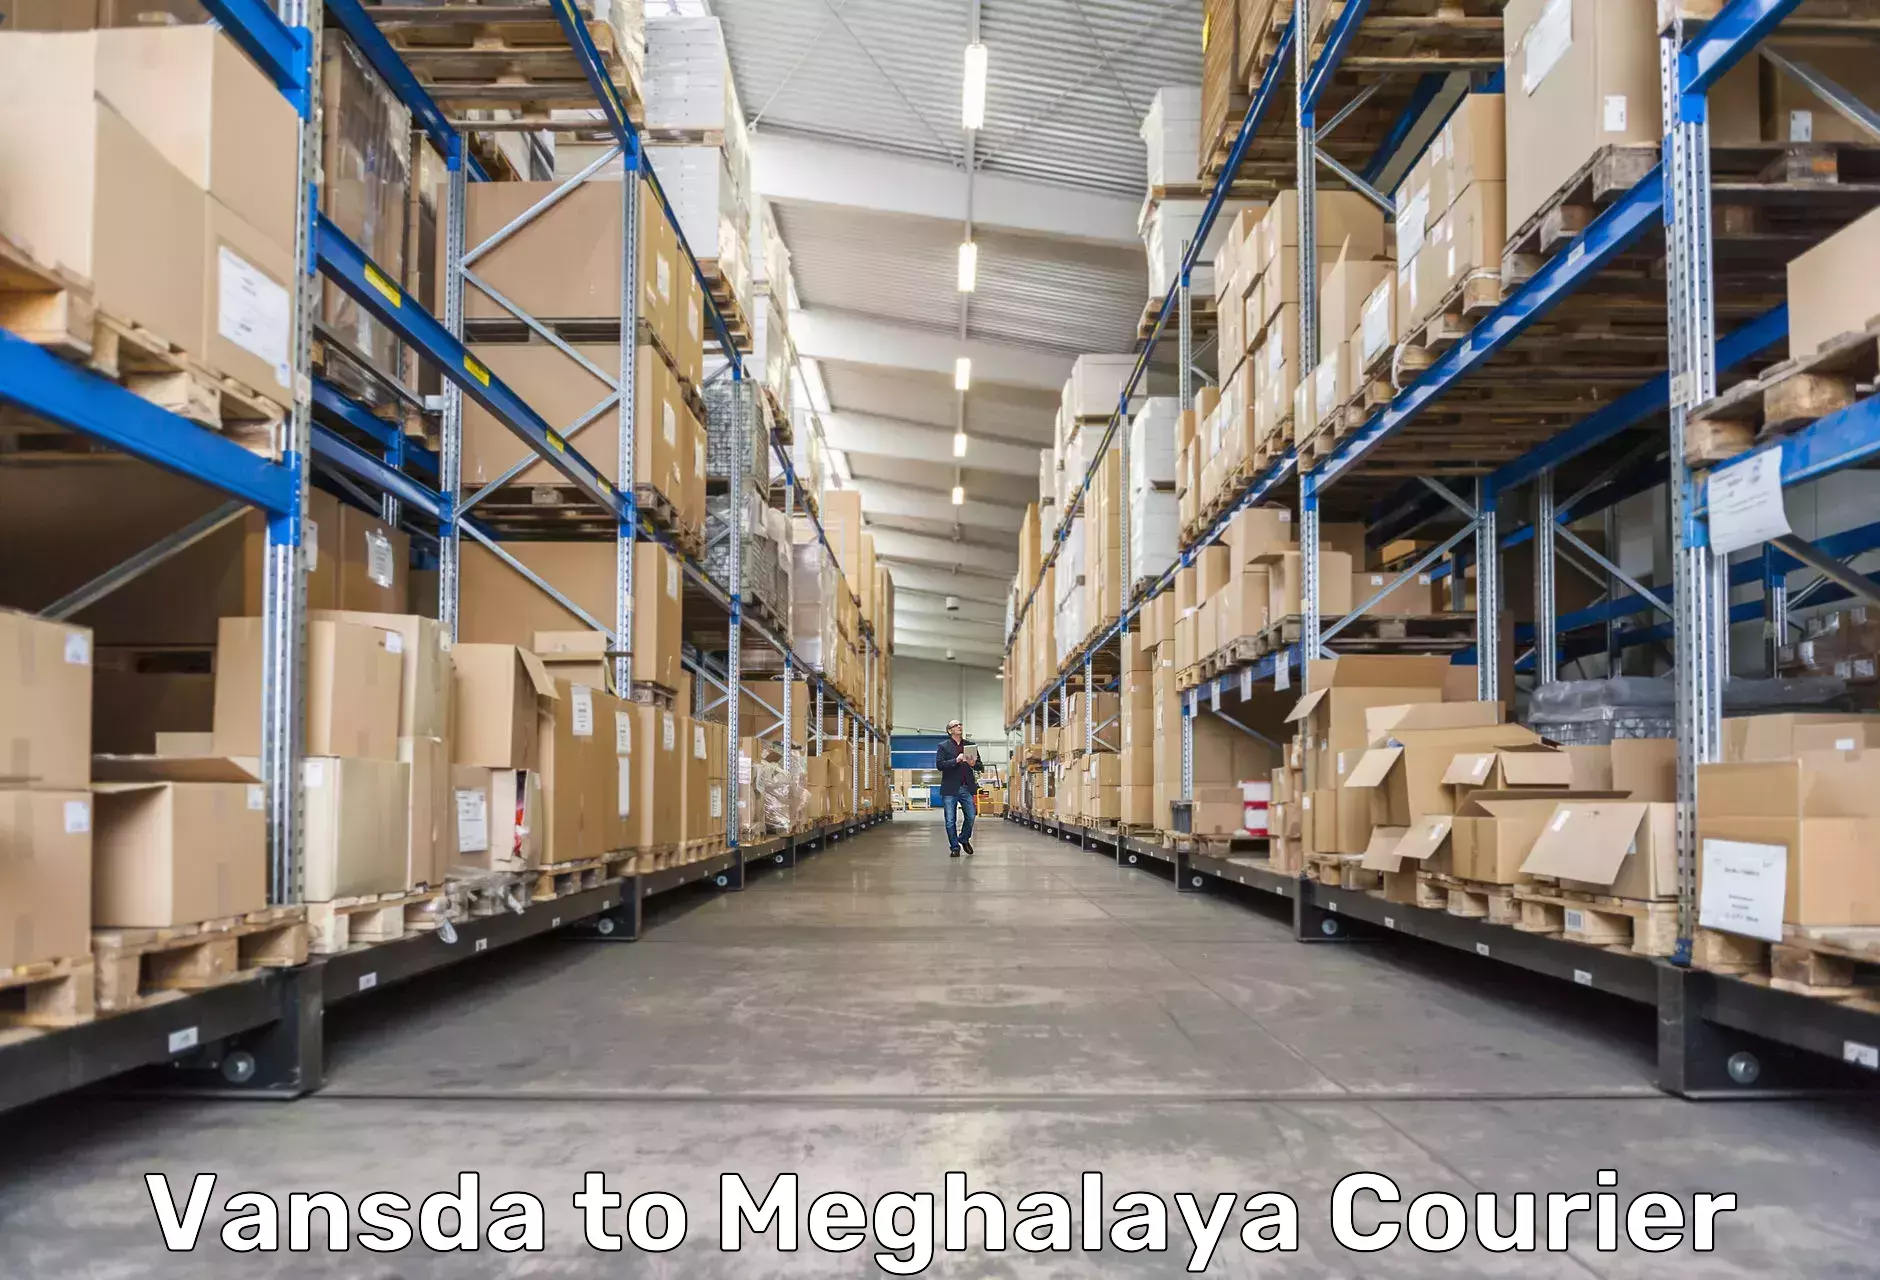 Courier service innovation Vansda to Meghalaya